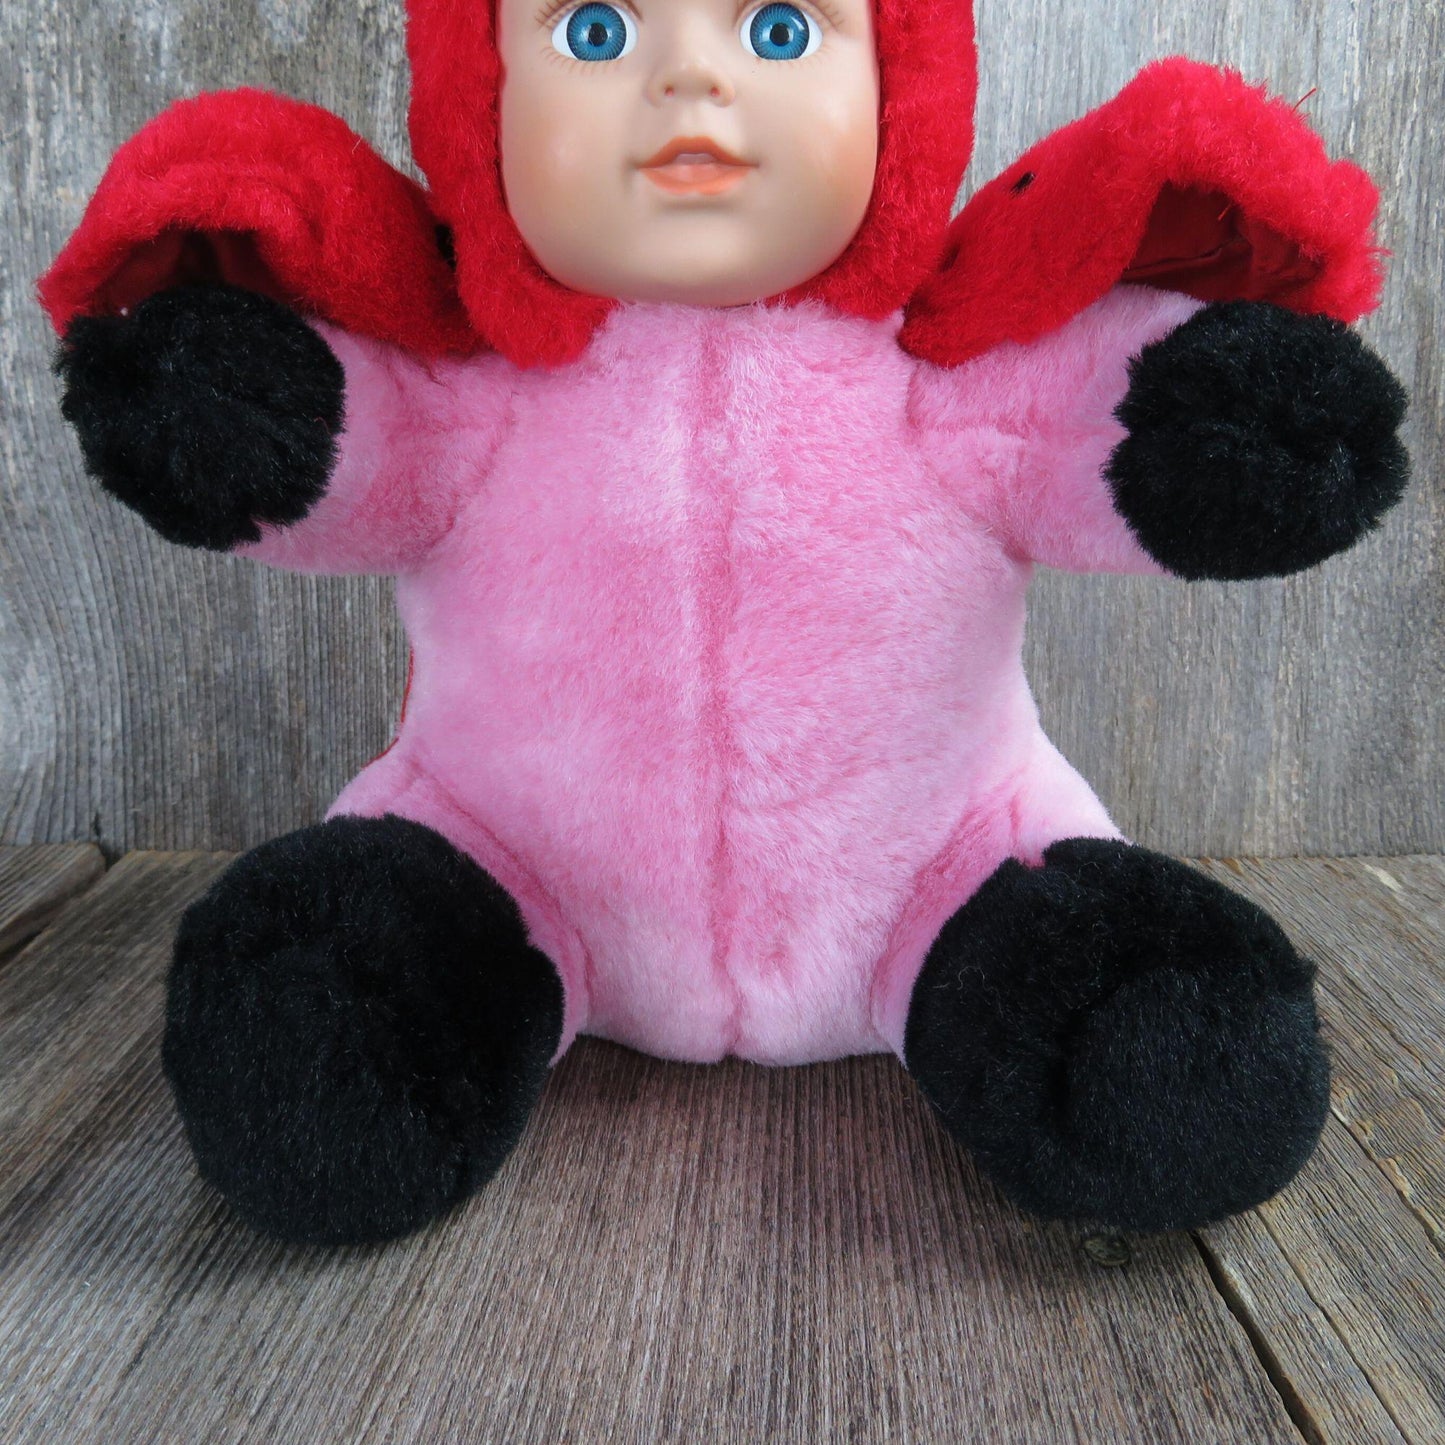 Vintage Ladybug Doll Plush Kellytoy Rubber Face Stuffed Animal Body Red Pink 2000 Kelly toy